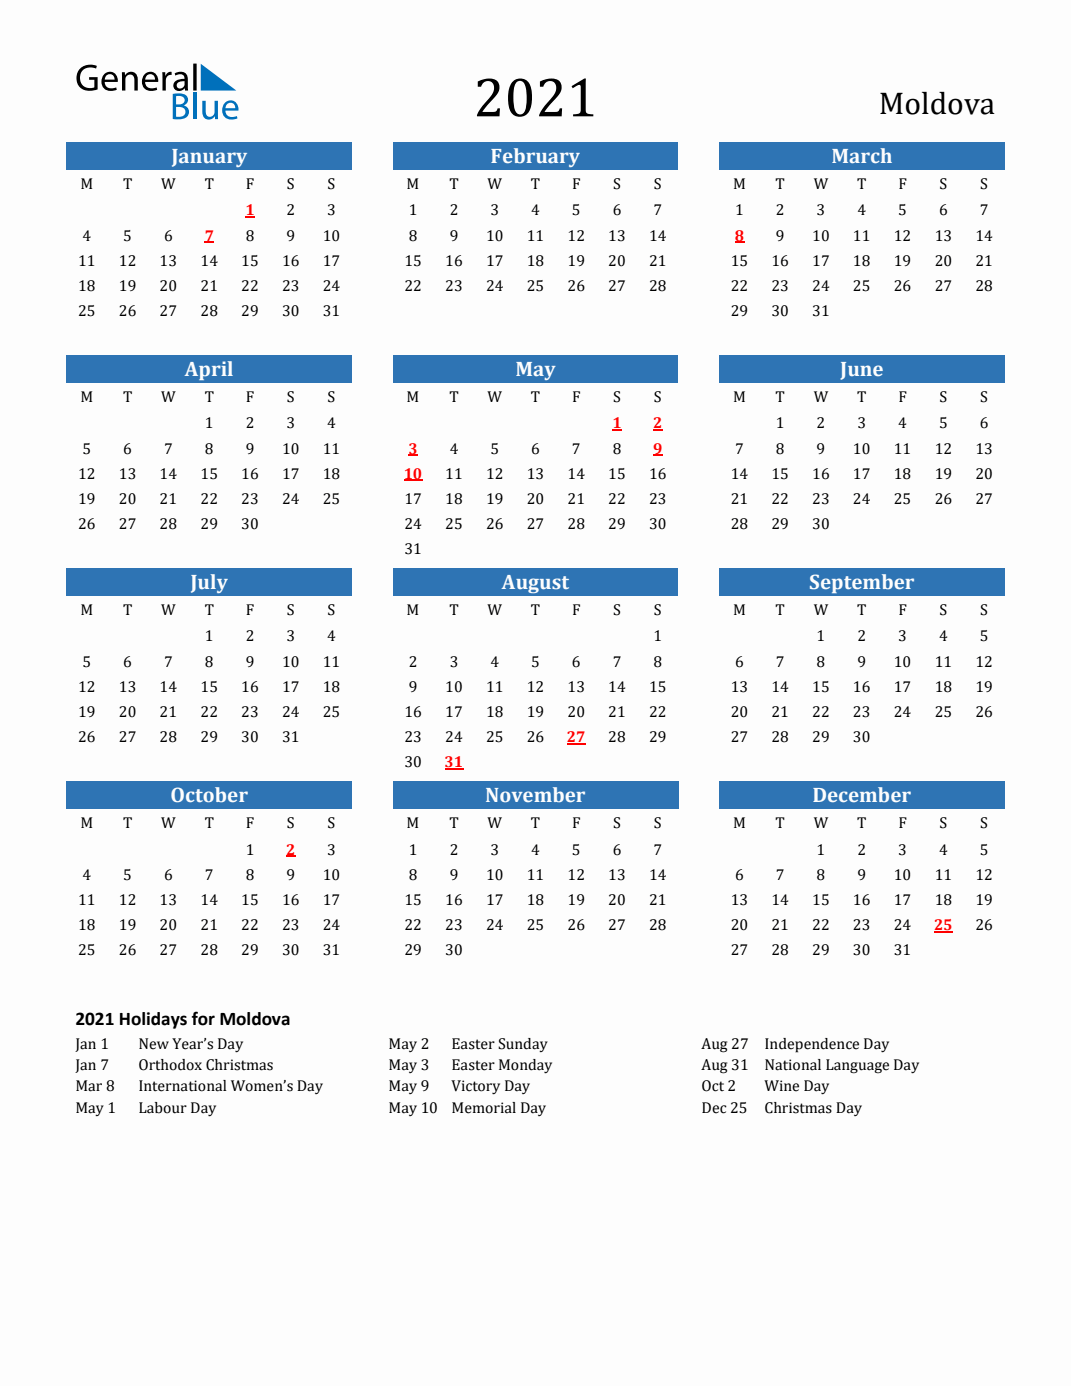 2021 Holiday Calendar for Moldova - Monday Start